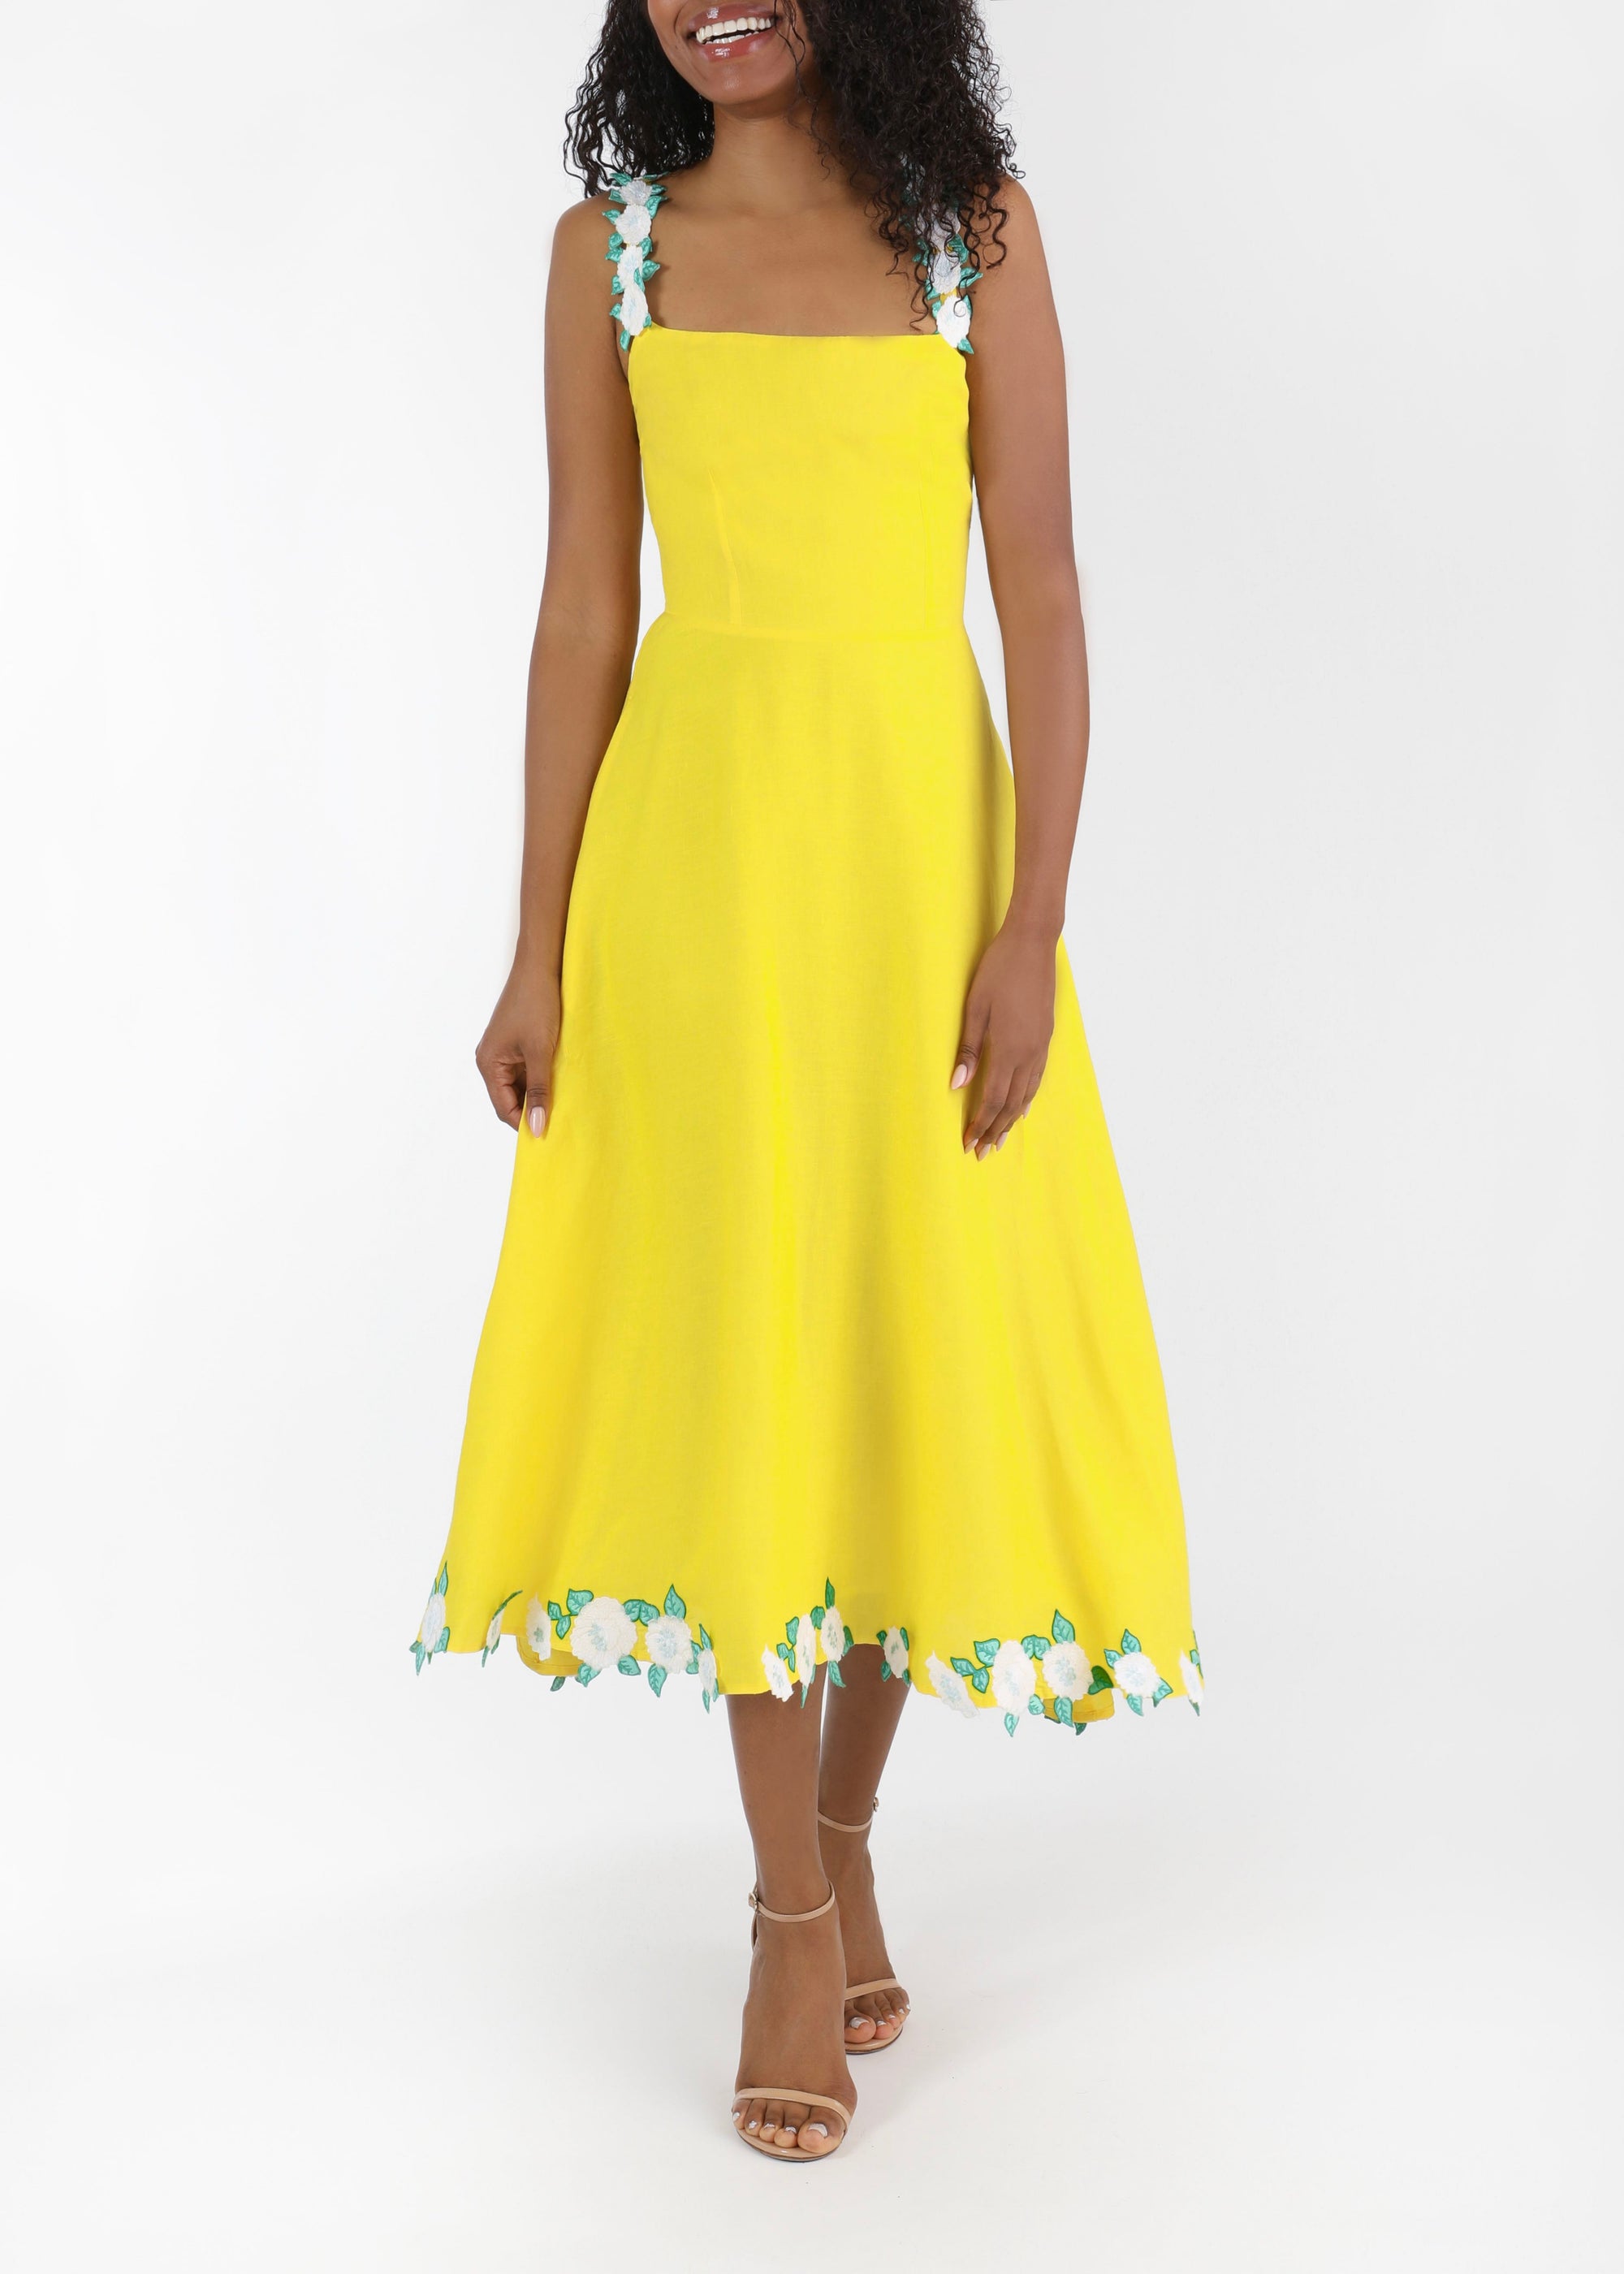 Fanm Mon x OTM Sasha Dress in Bright Yellow bridesmaids favorite 